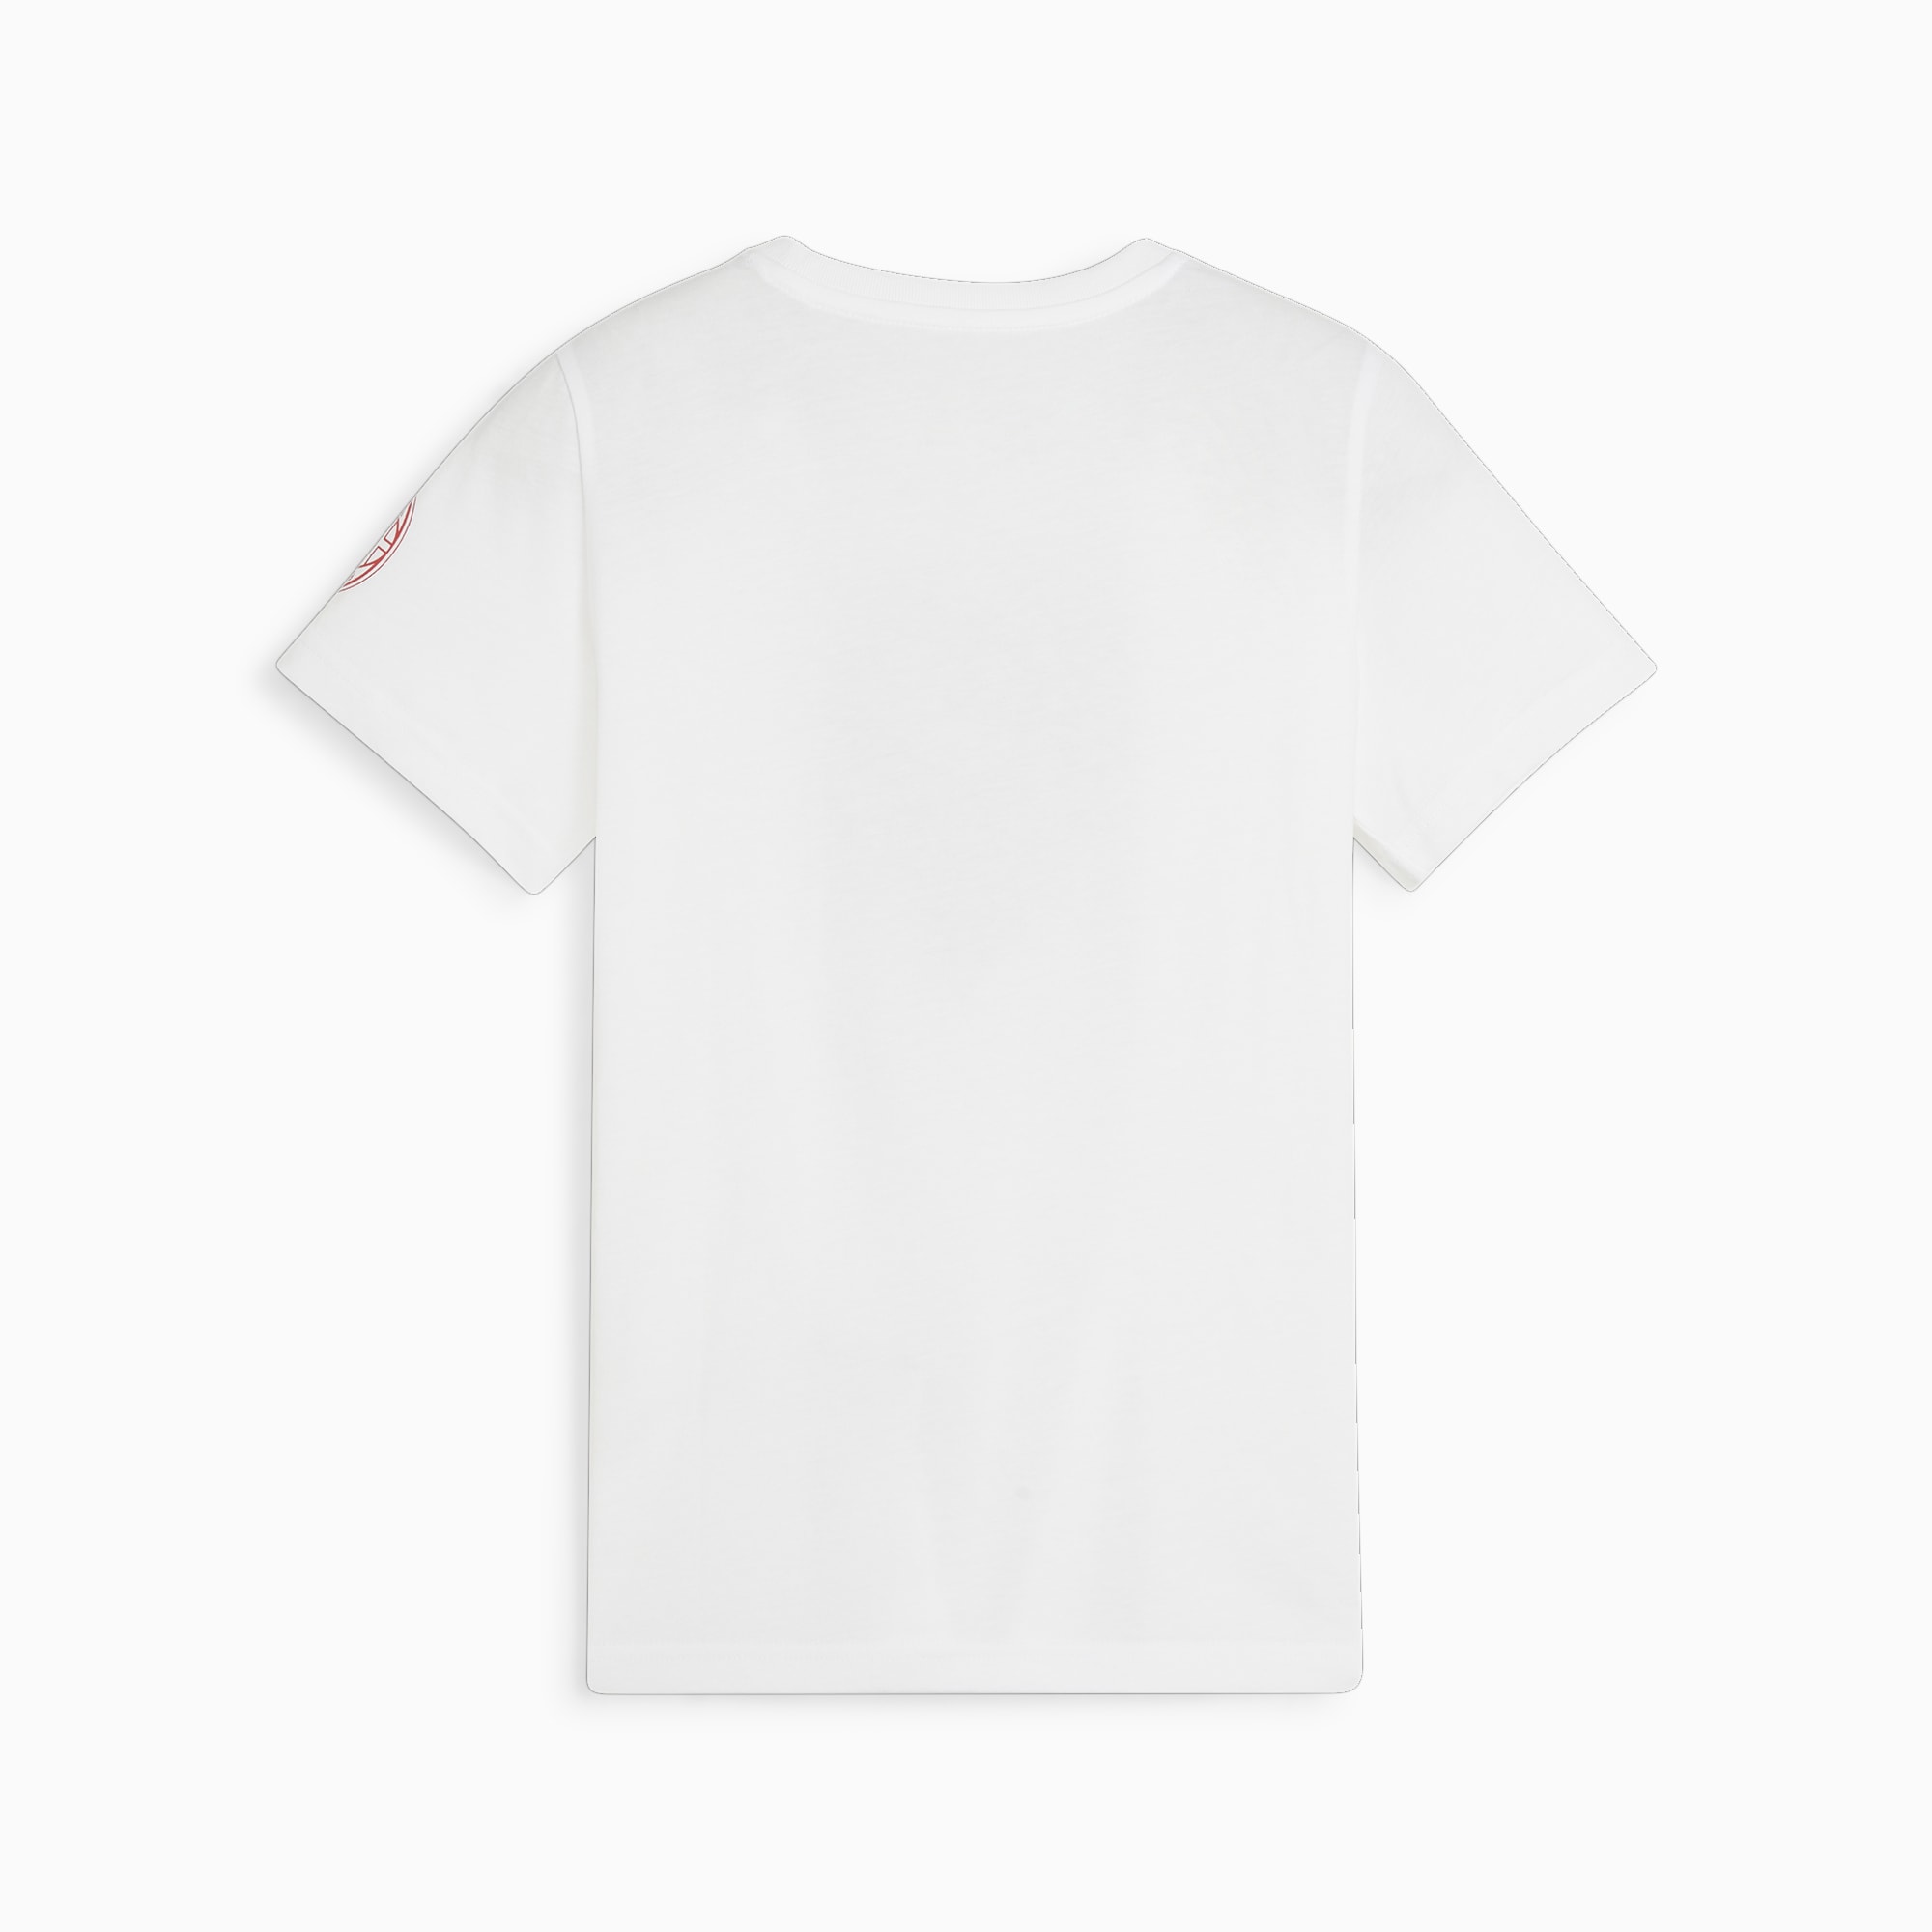 PUMA AC Milan Ftblicons Youth T-Shirt, White, Size 116, Clothing